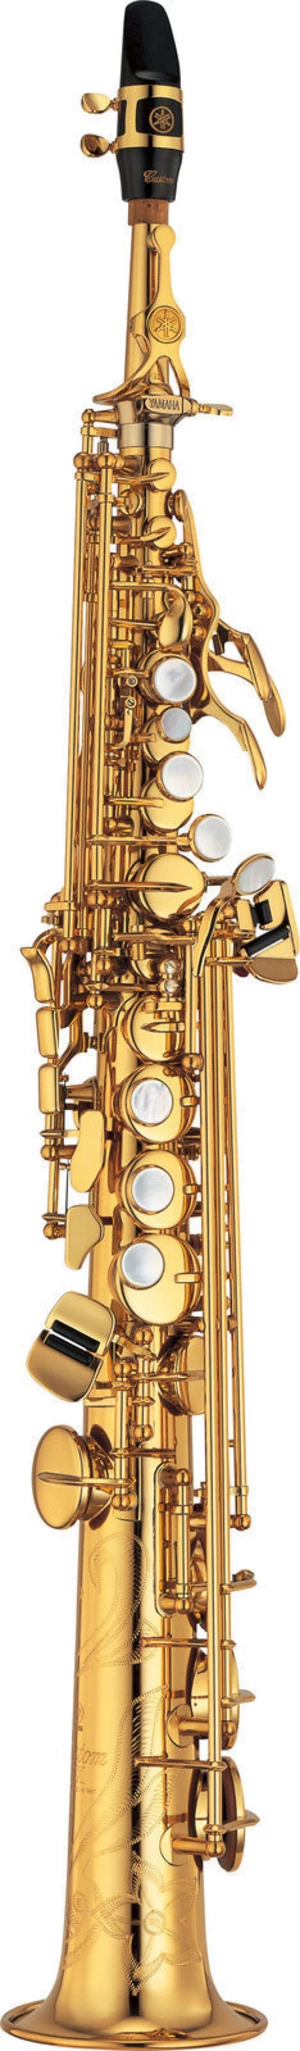 Yamaha YSS-875EXHGGP 02 Saxophones sopranos